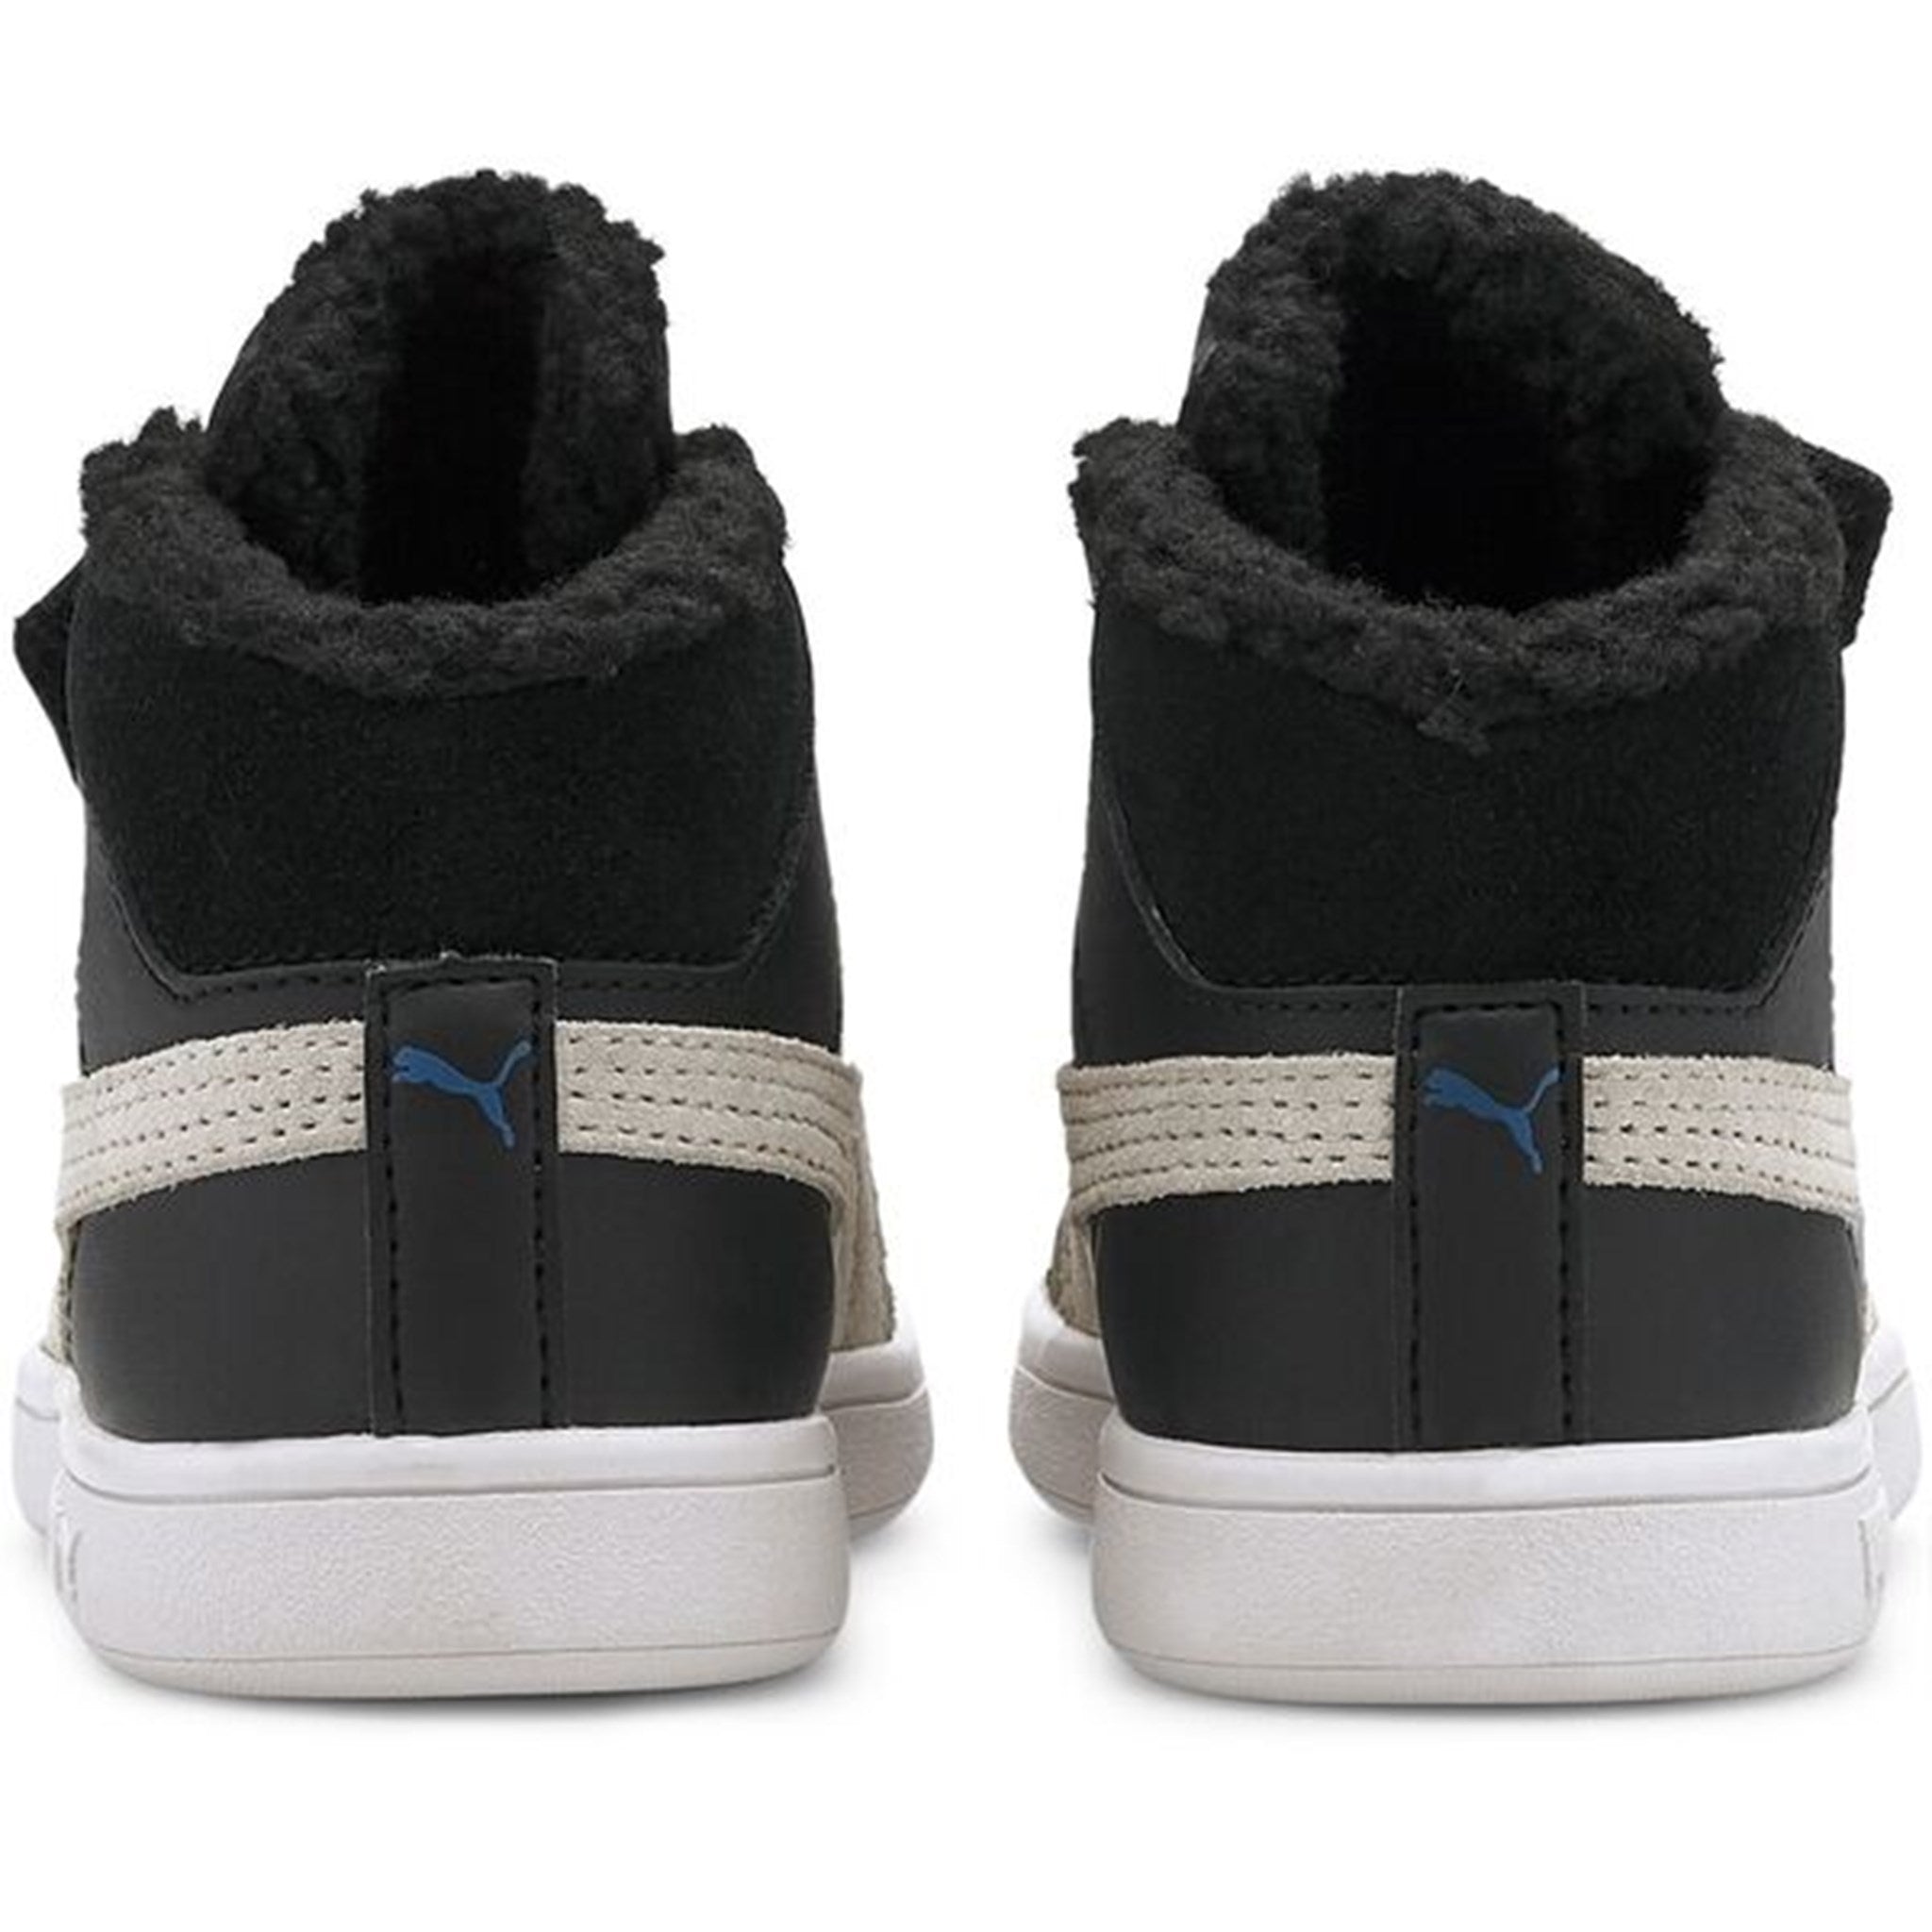 Puma Sneakers Smash v2 Mid Fur Black/White 3